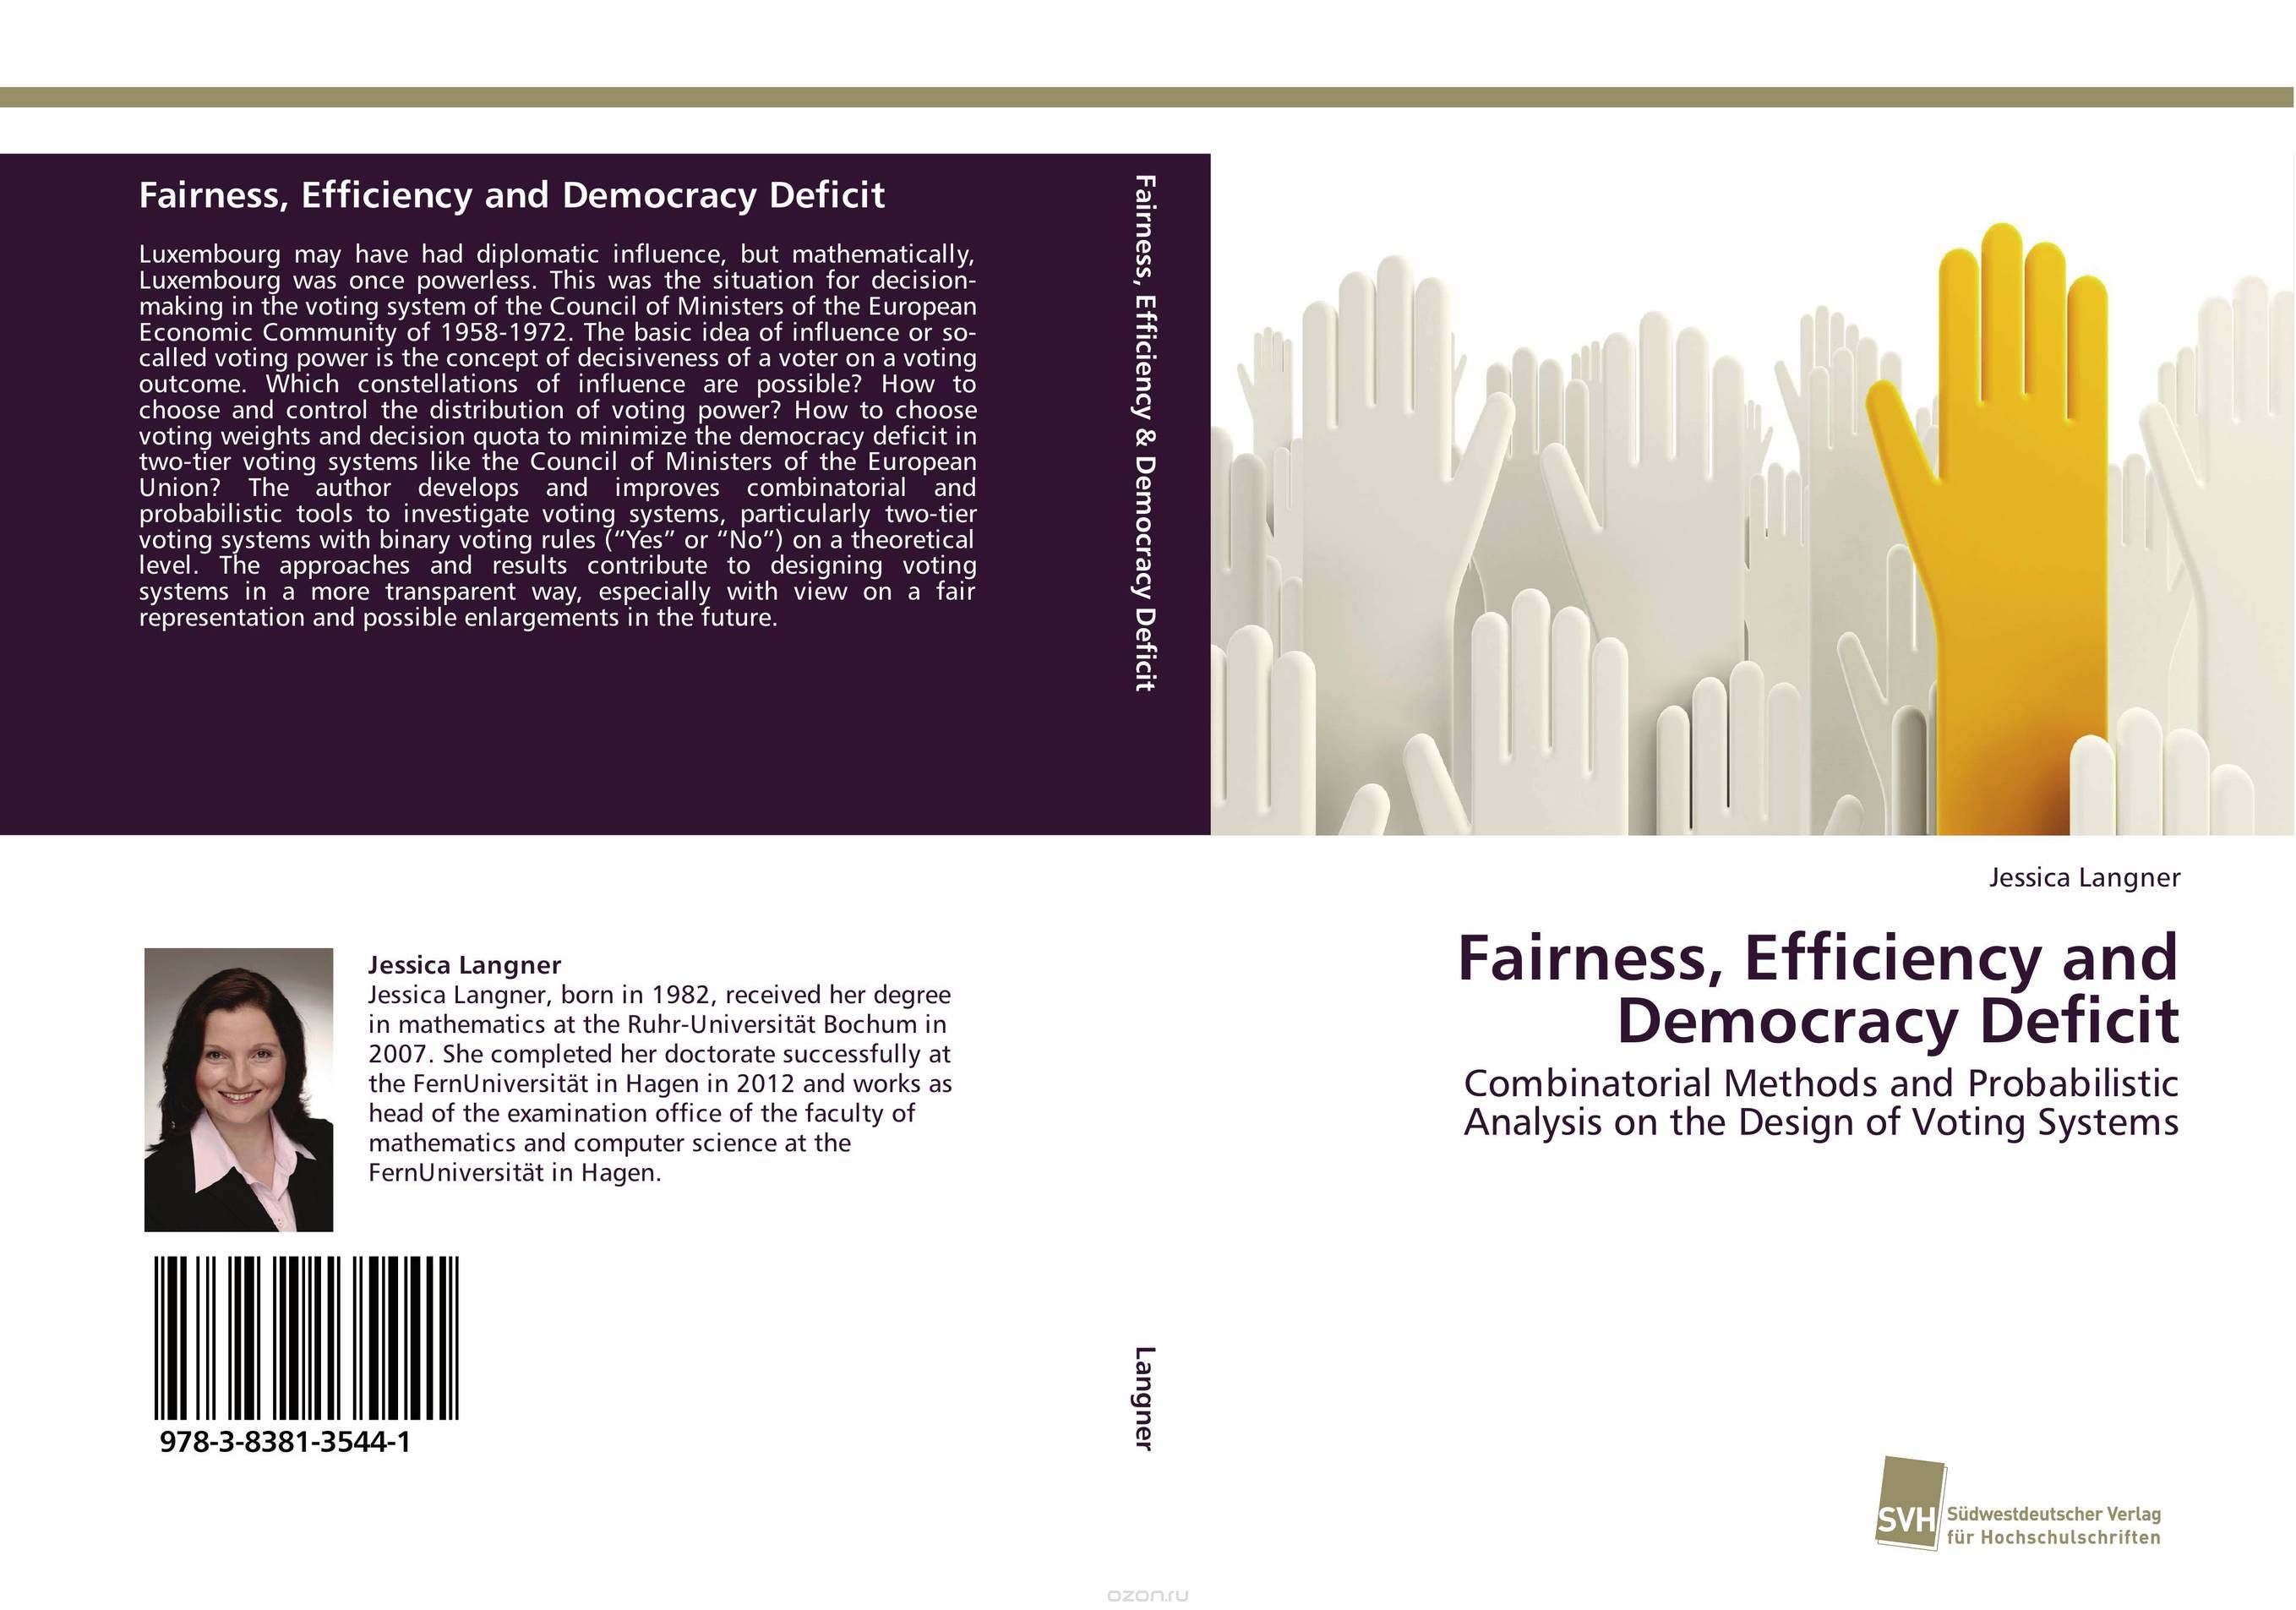 Fairness, Efficiency and Democracy Deficit